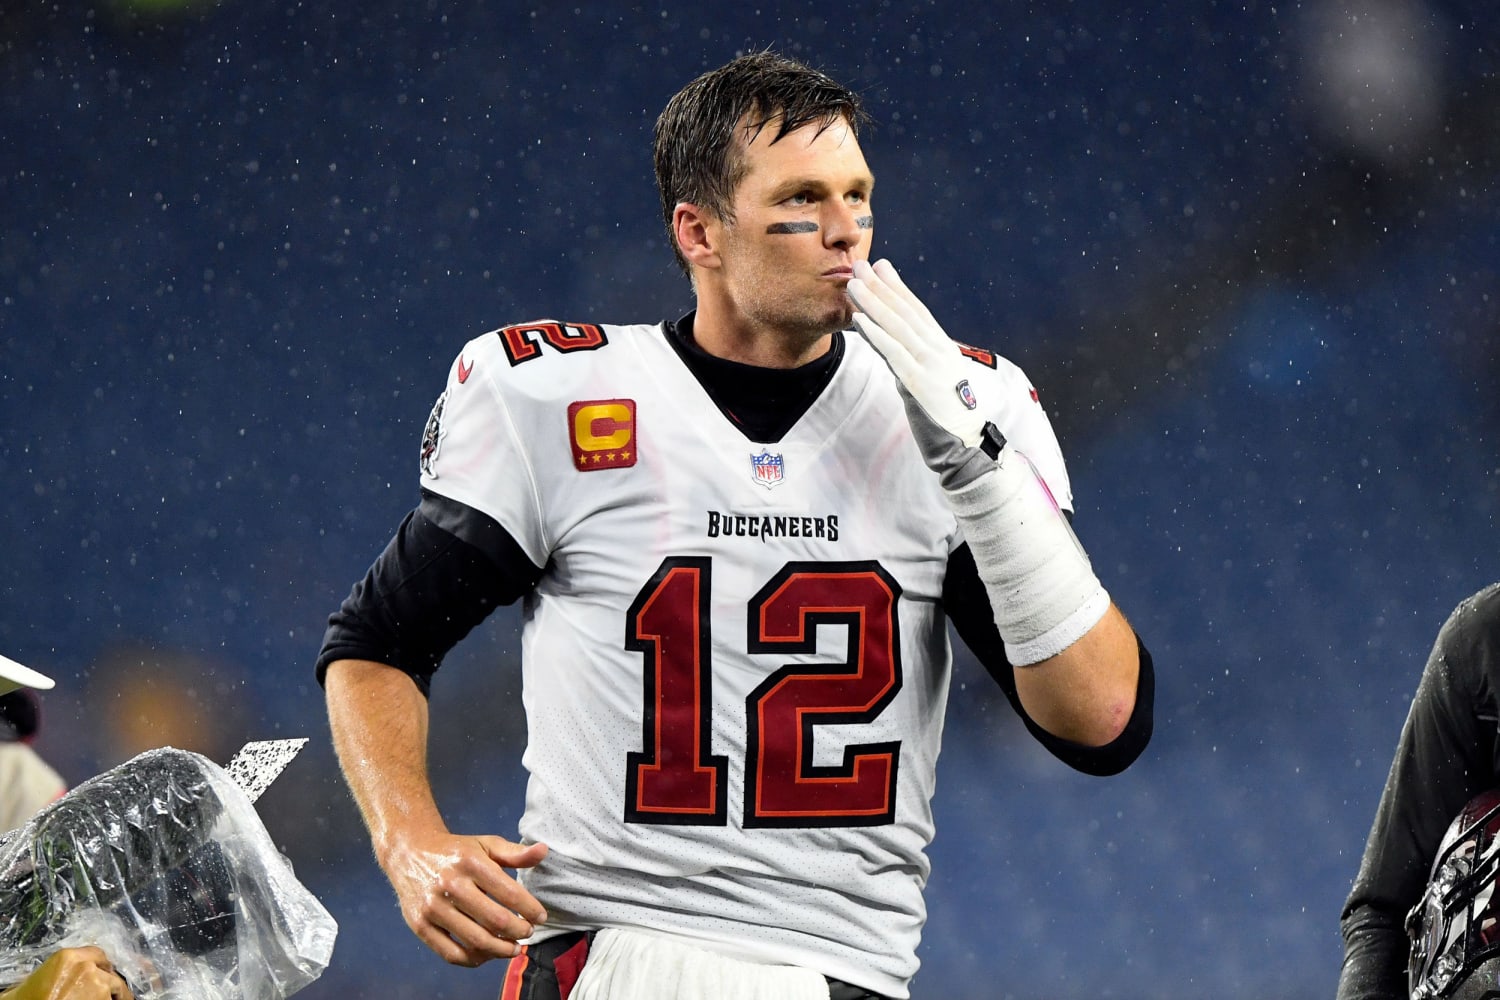 2 Photos Sum Up Tom Brady's Heartbreaking Night